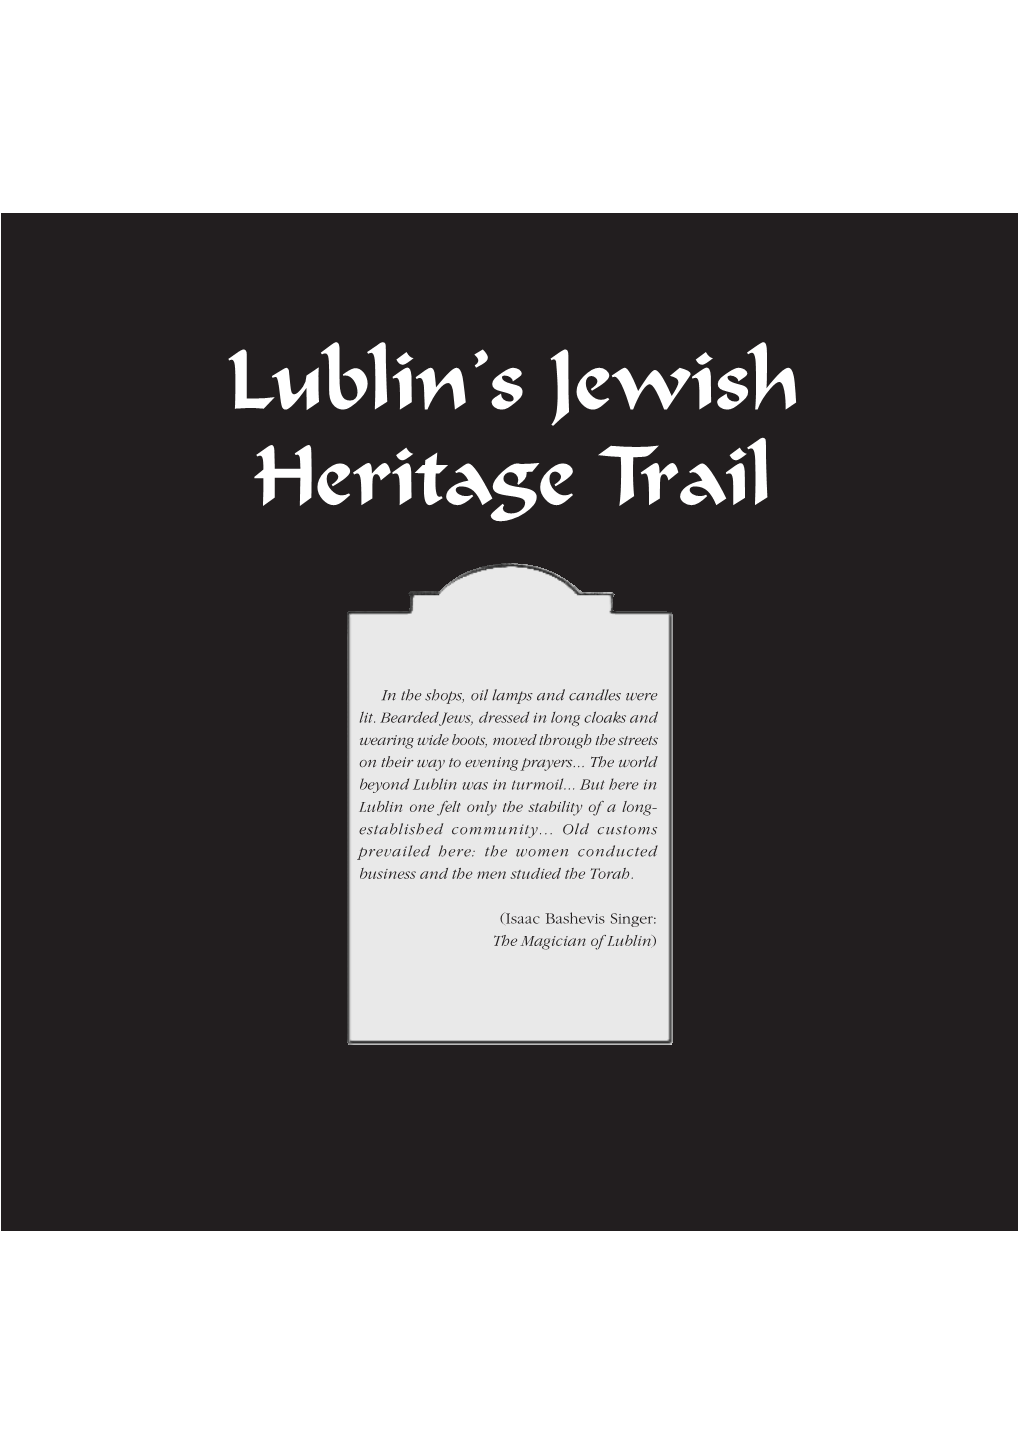 Lublin's Jewish Heritage Trail